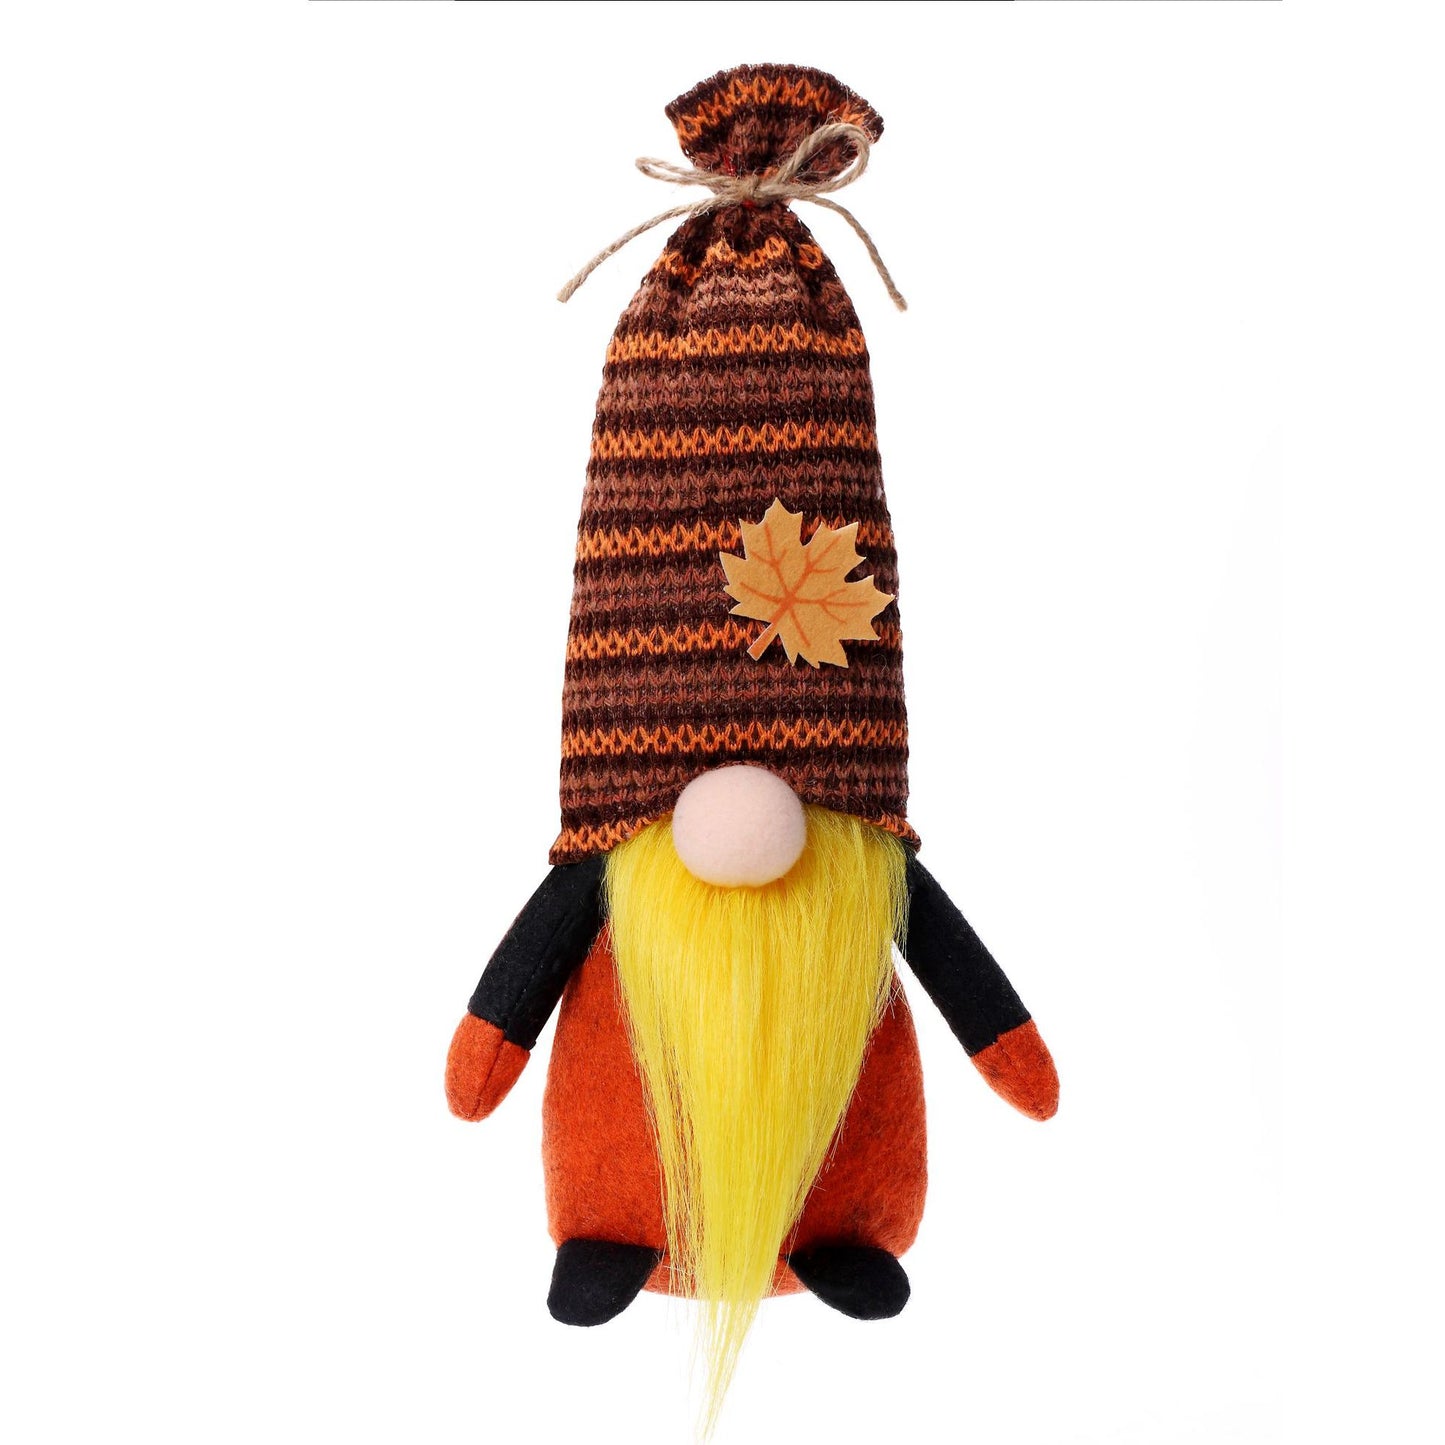 Harvest Knit Gnome